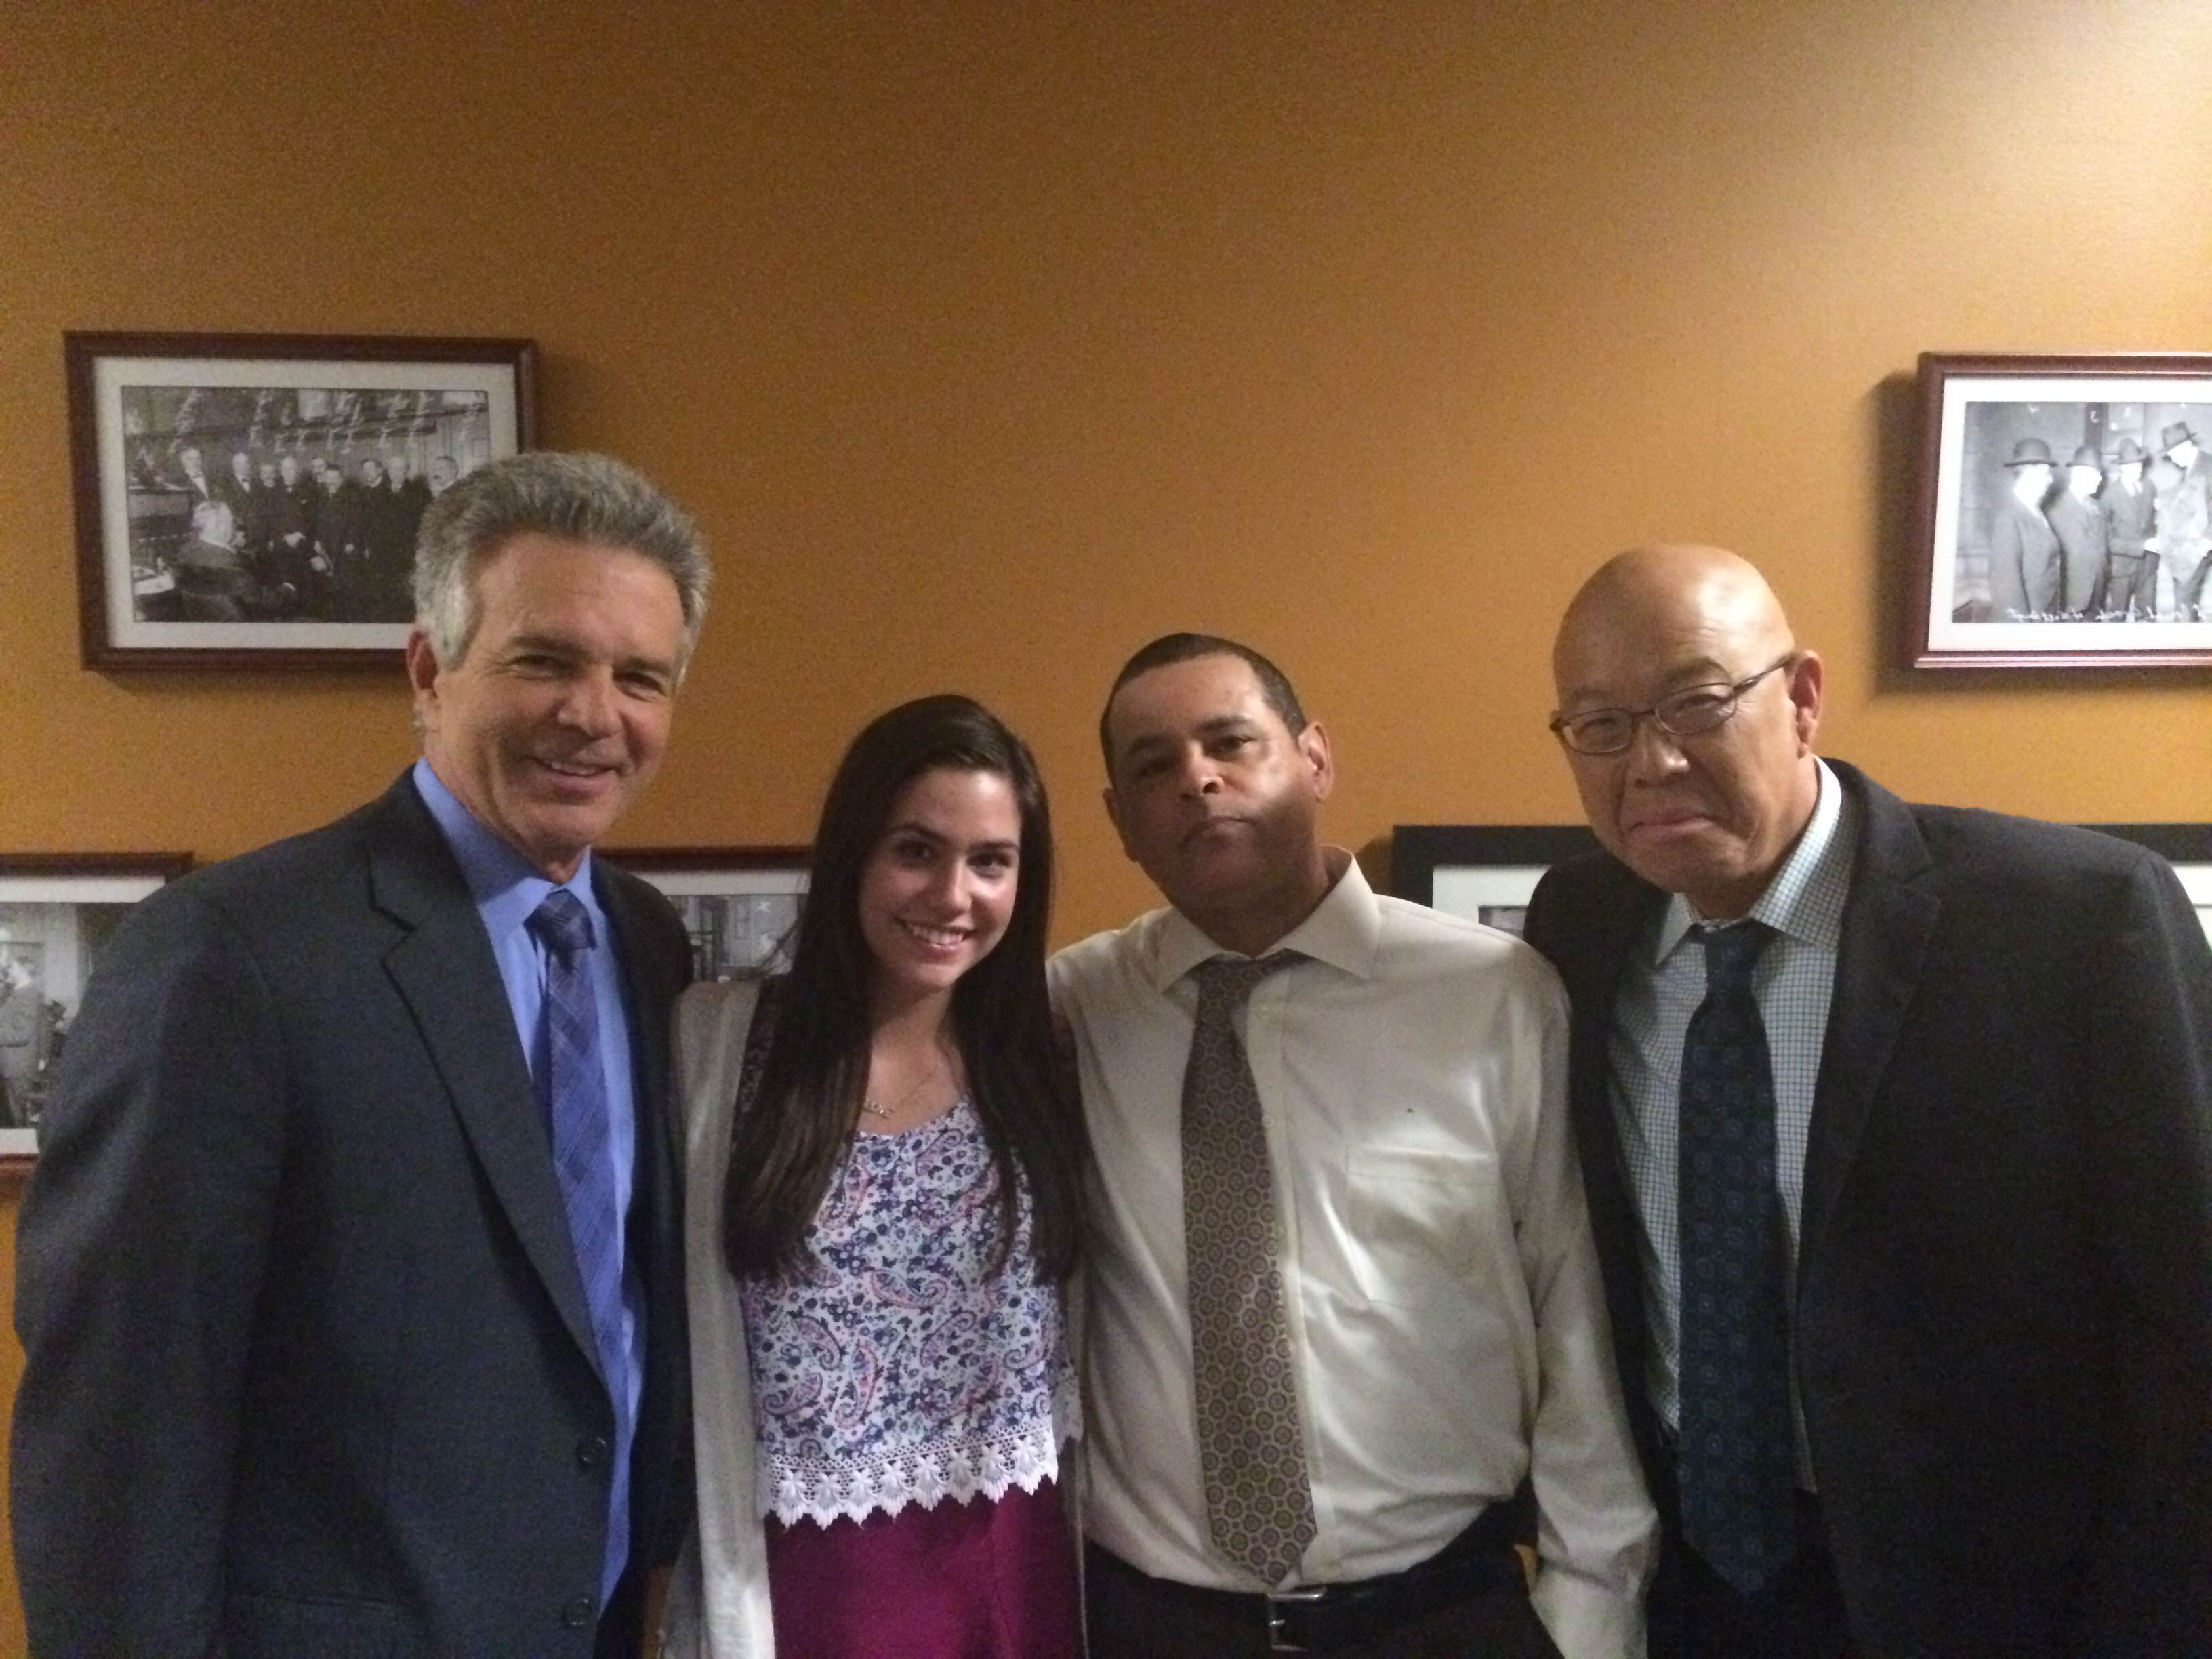 Tony Denison, Savannah Lathem, Raymond Cruz, & Michael Paul Chan on set of Major Crimes 